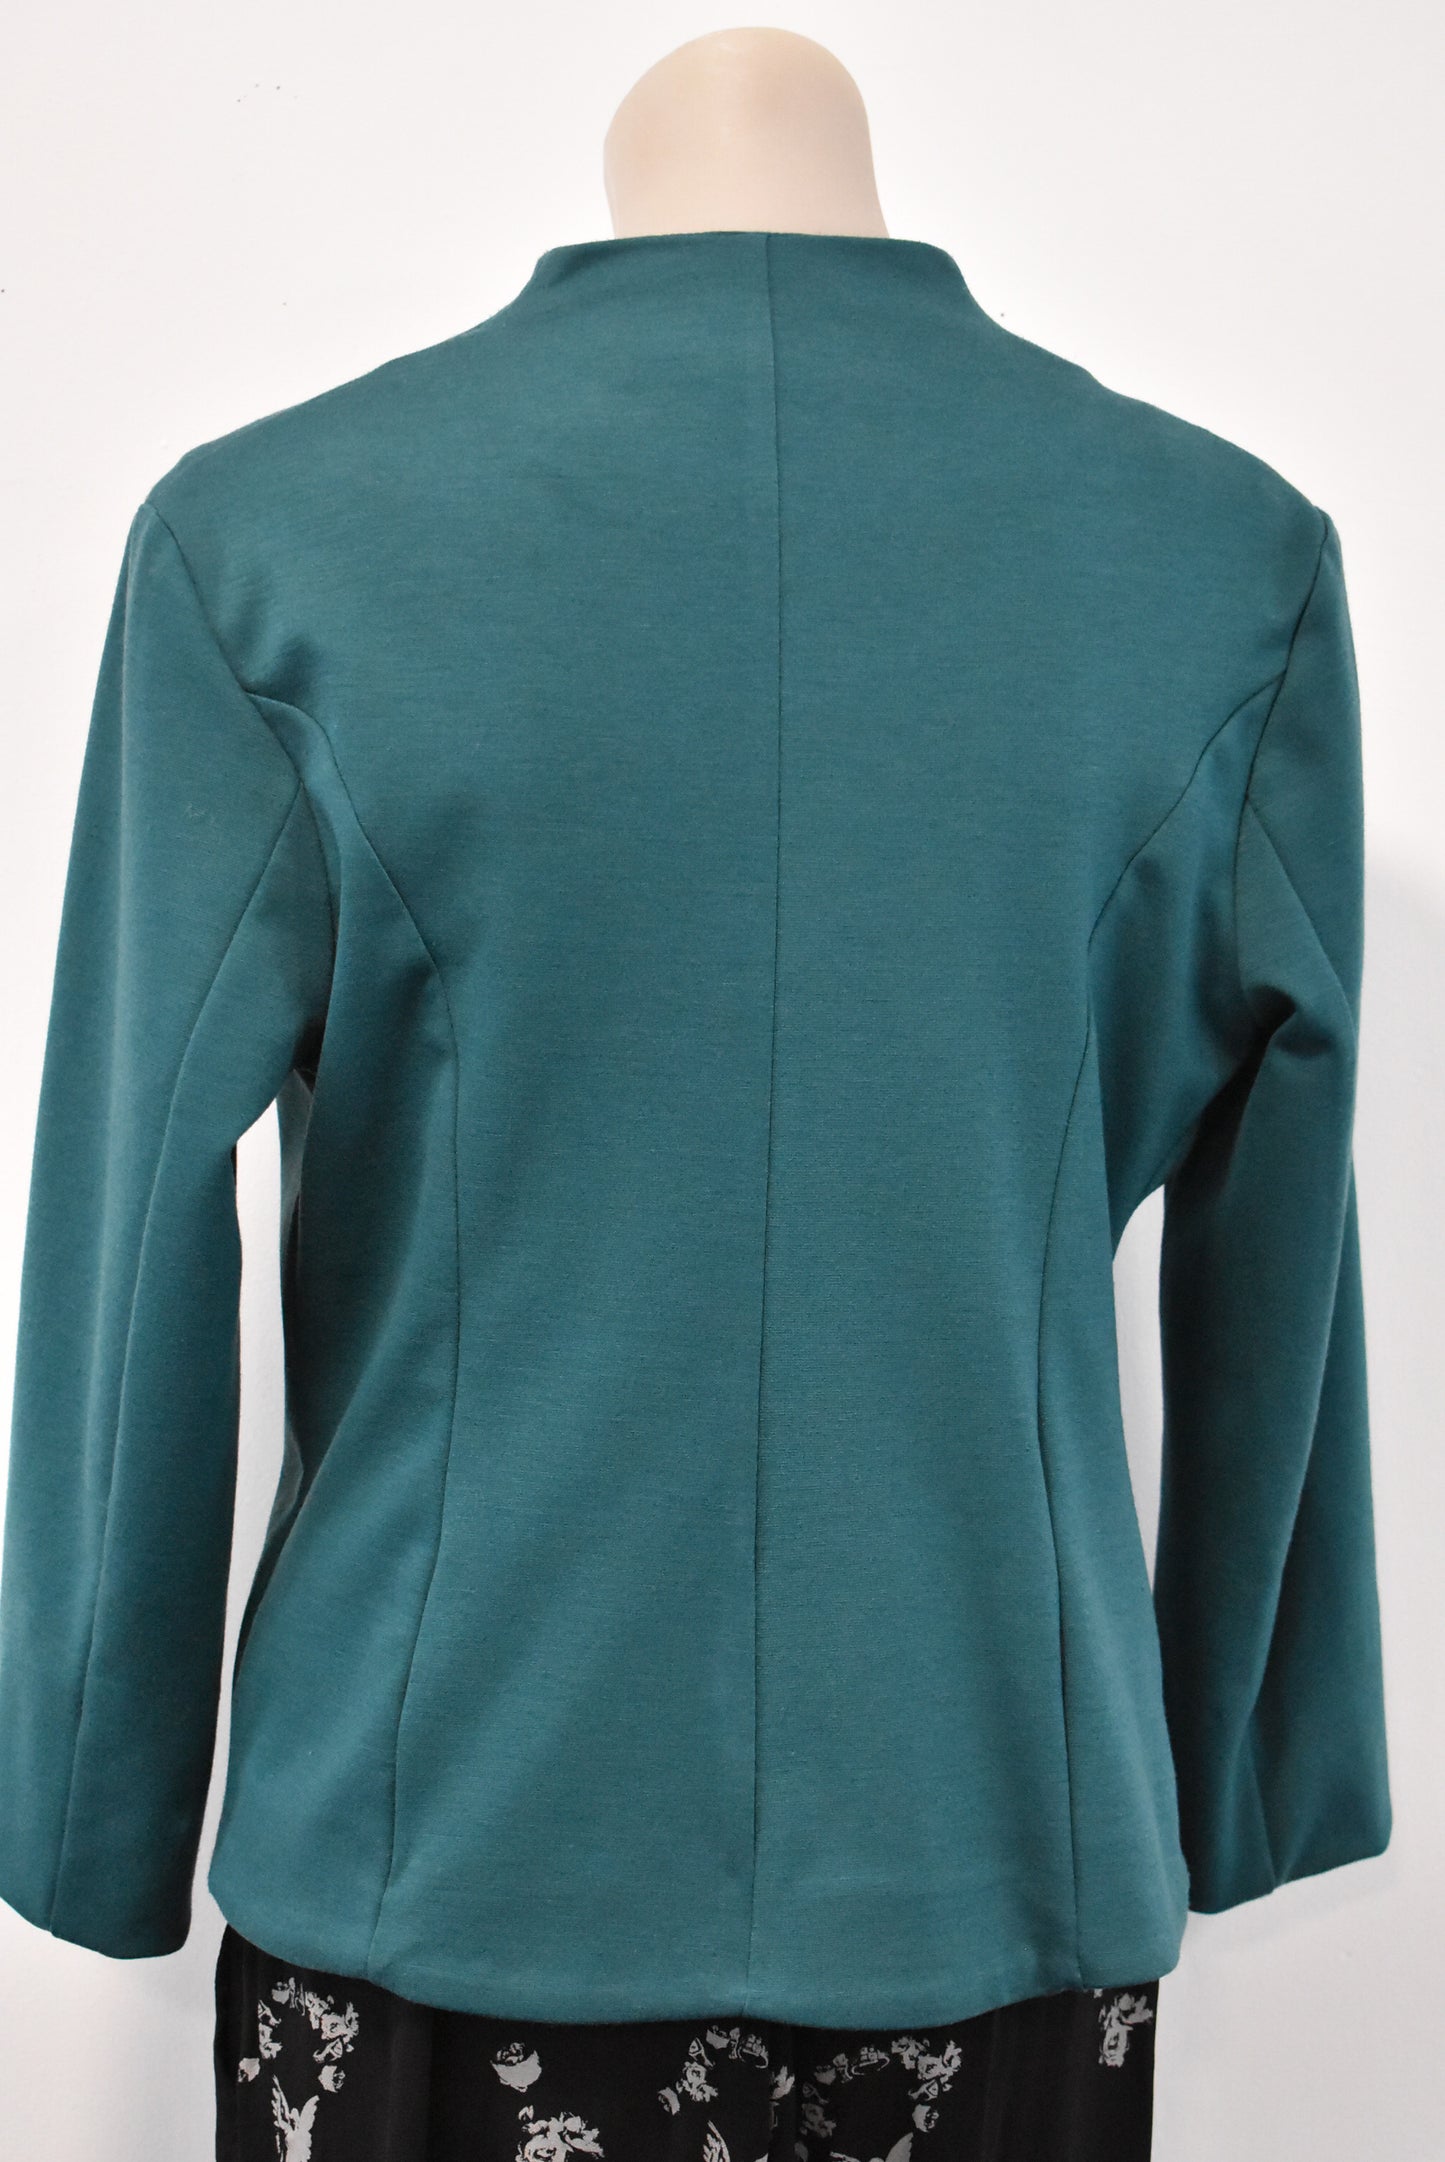 Andrea Yasmin Australian designed green blazer, S